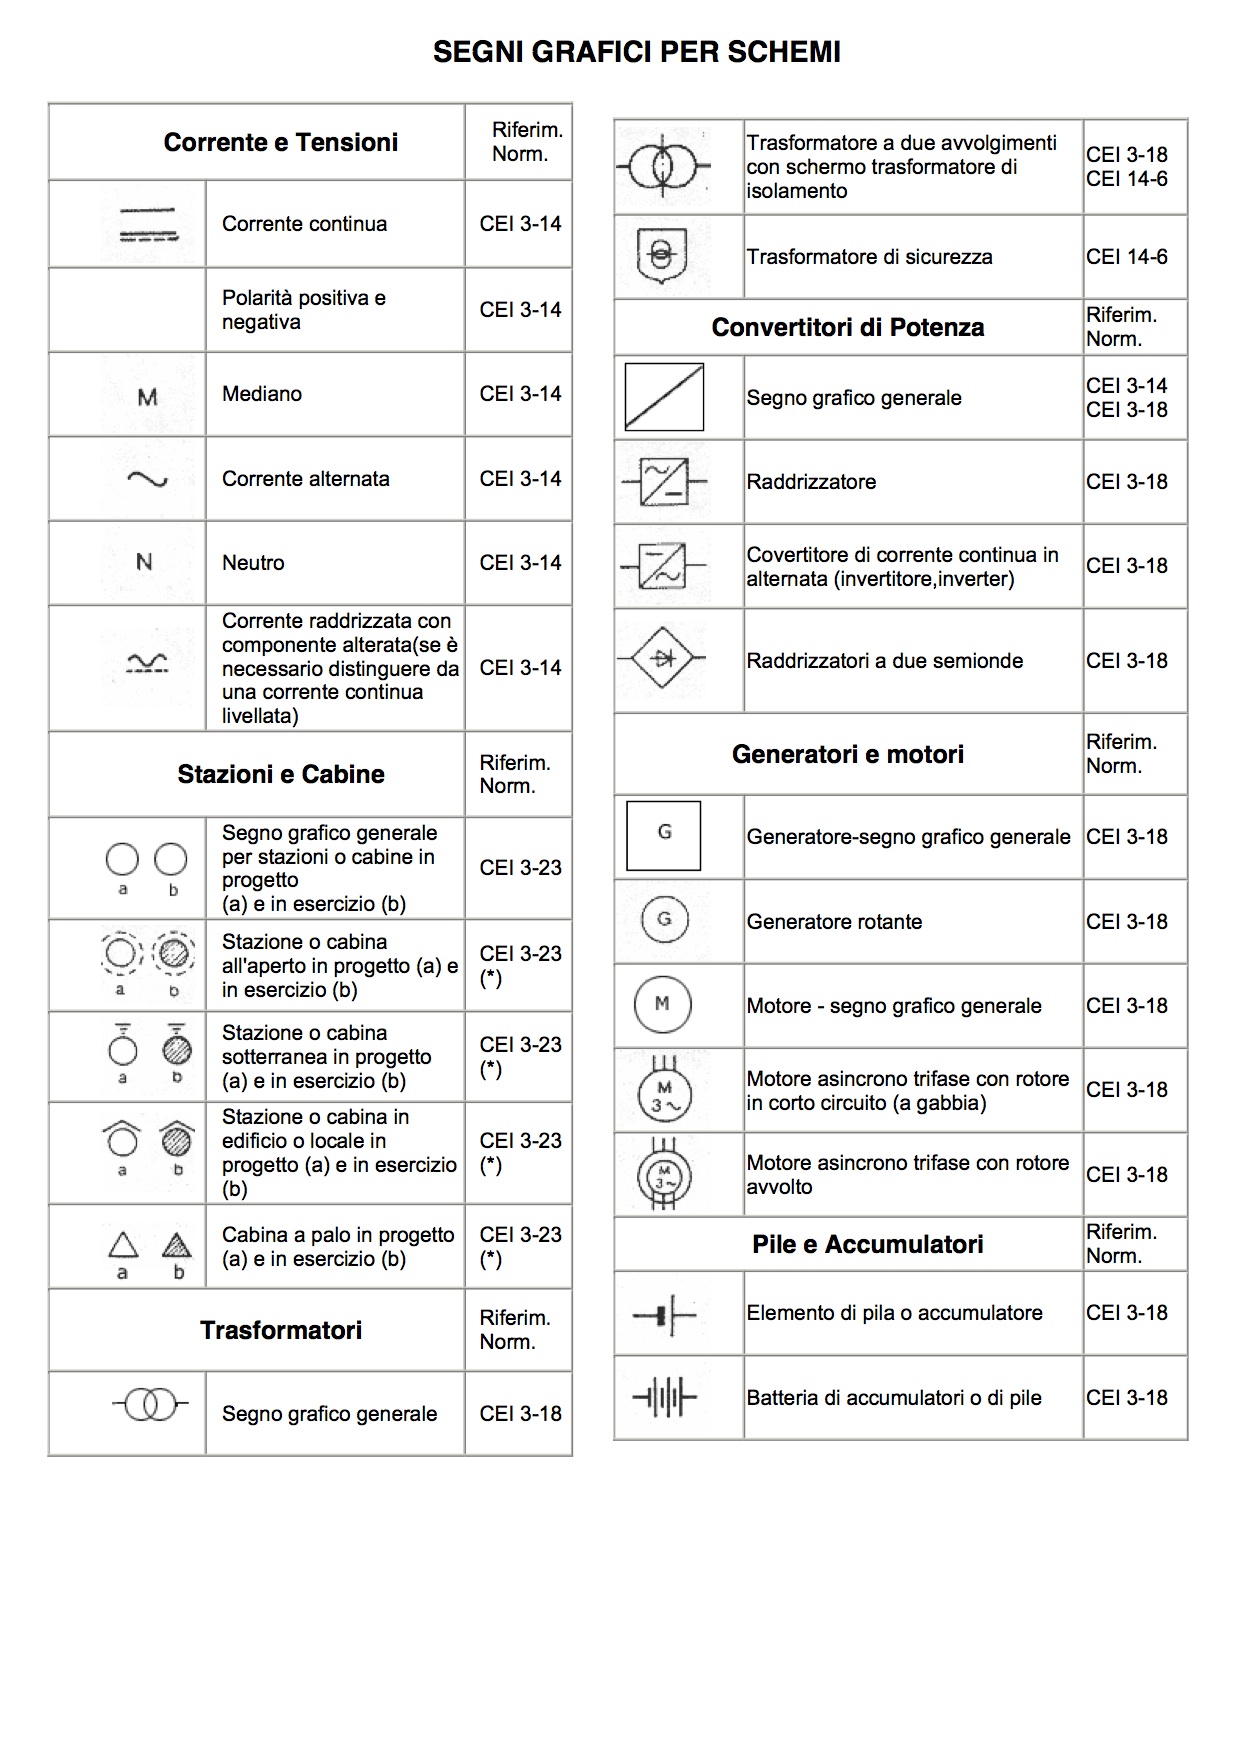 simboli elettrici civili pdf to excel